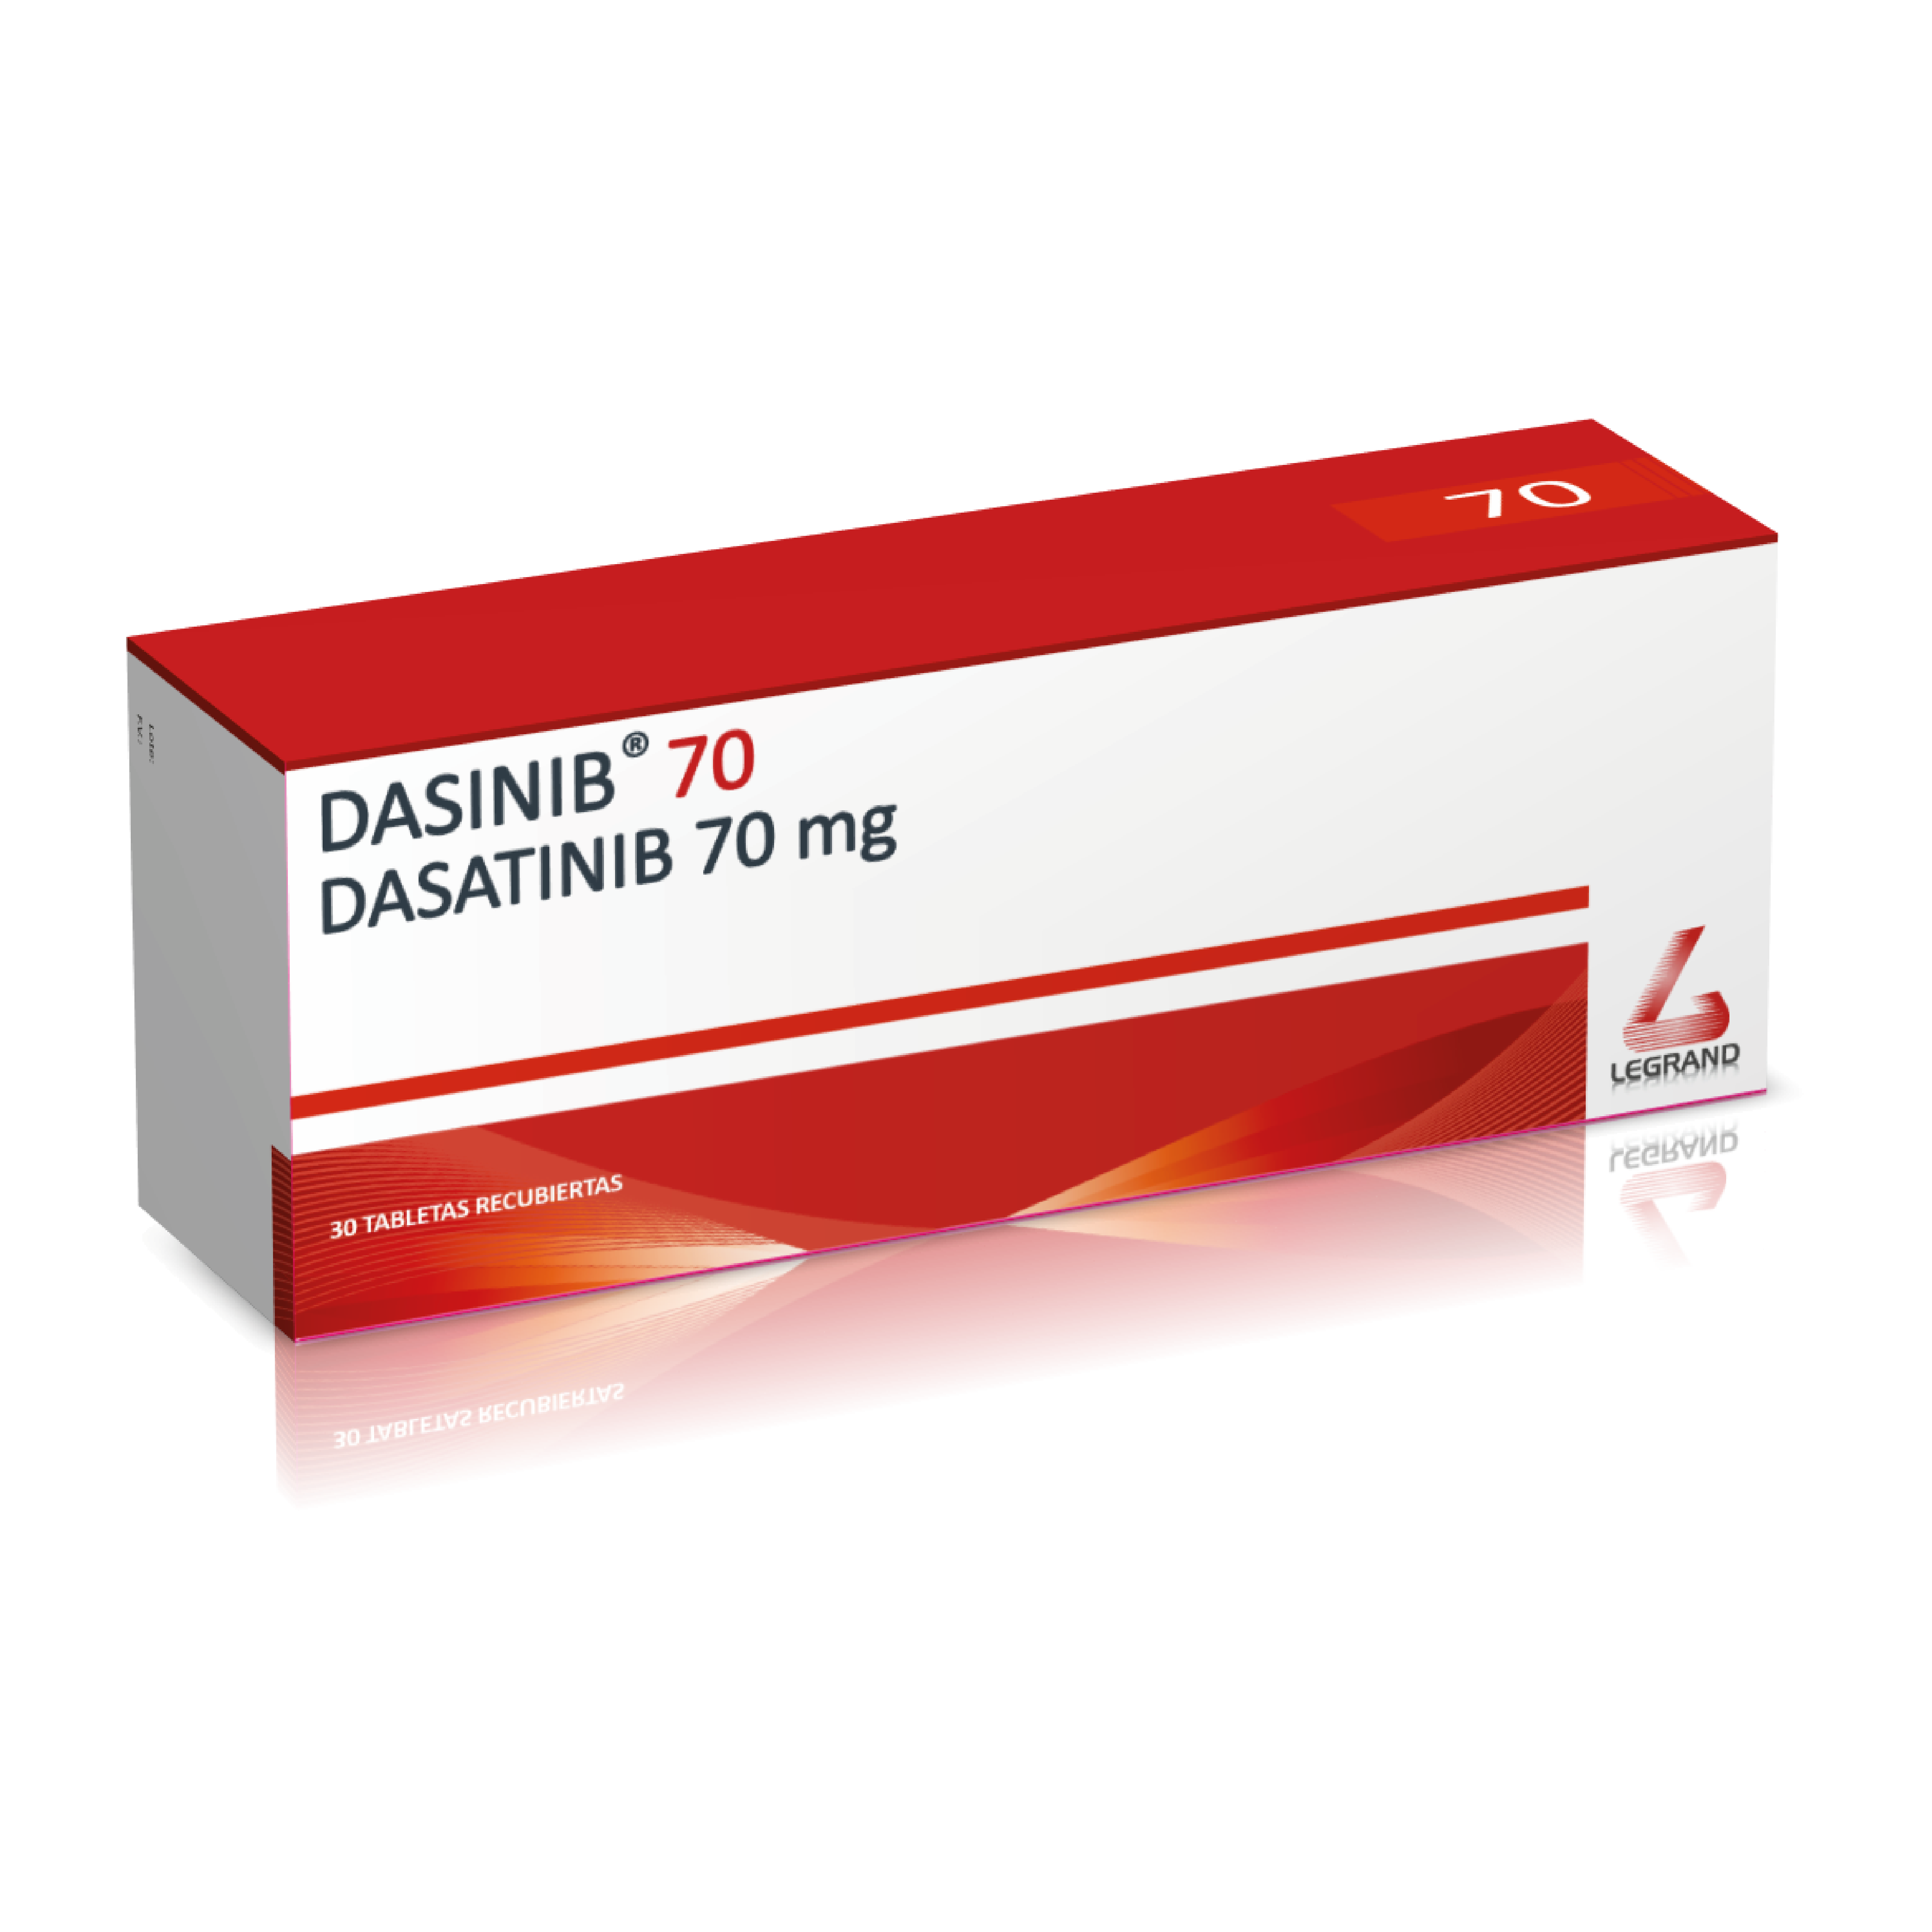 Dasinib® 70